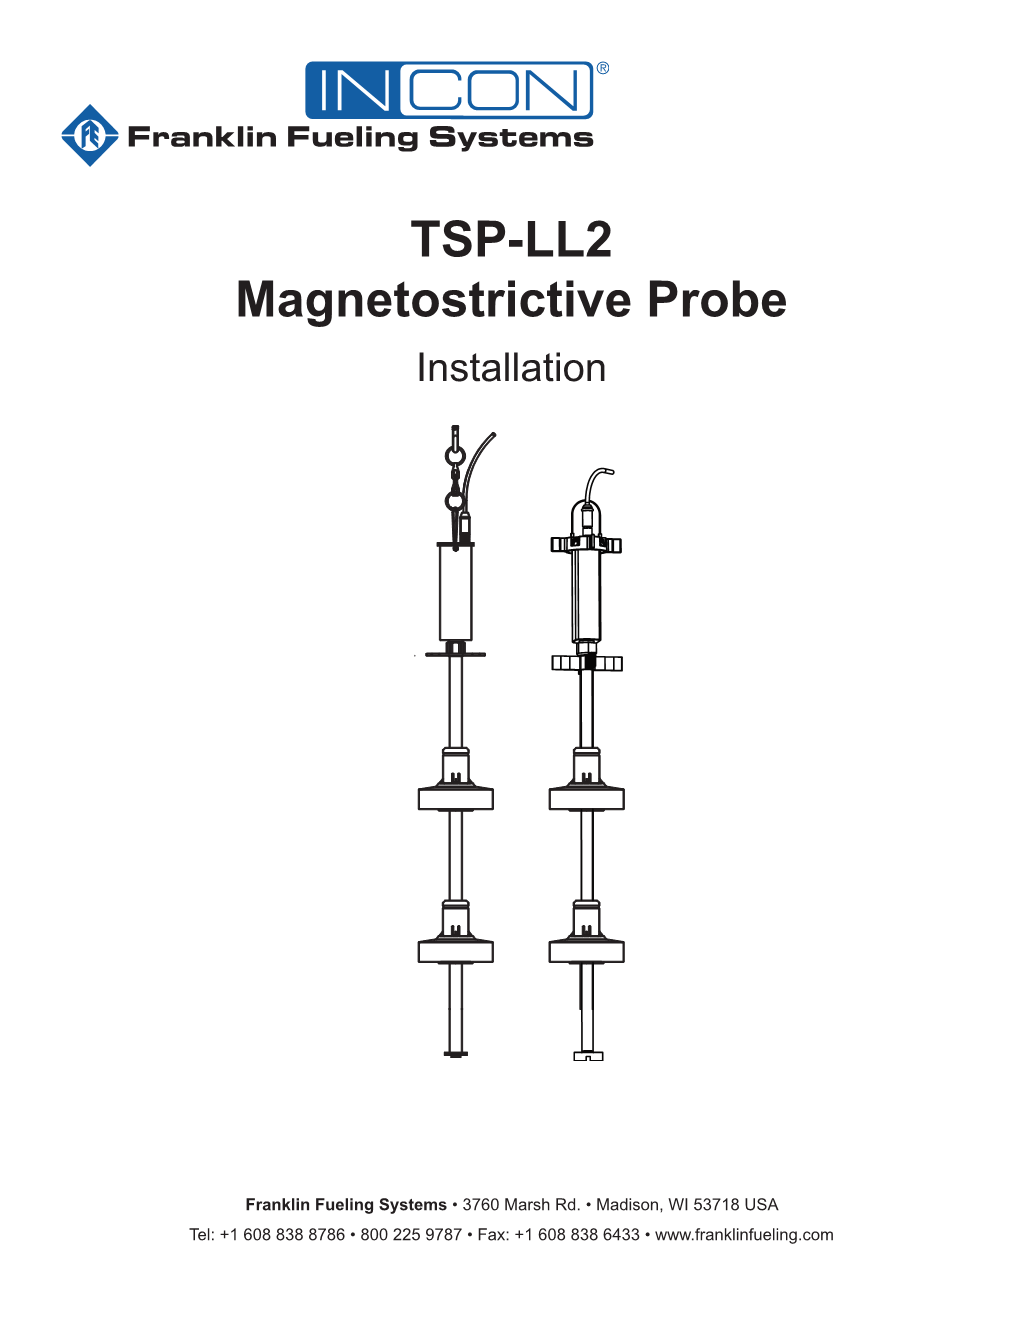 TSP-LL2 Magnetostrictive Probe Installation